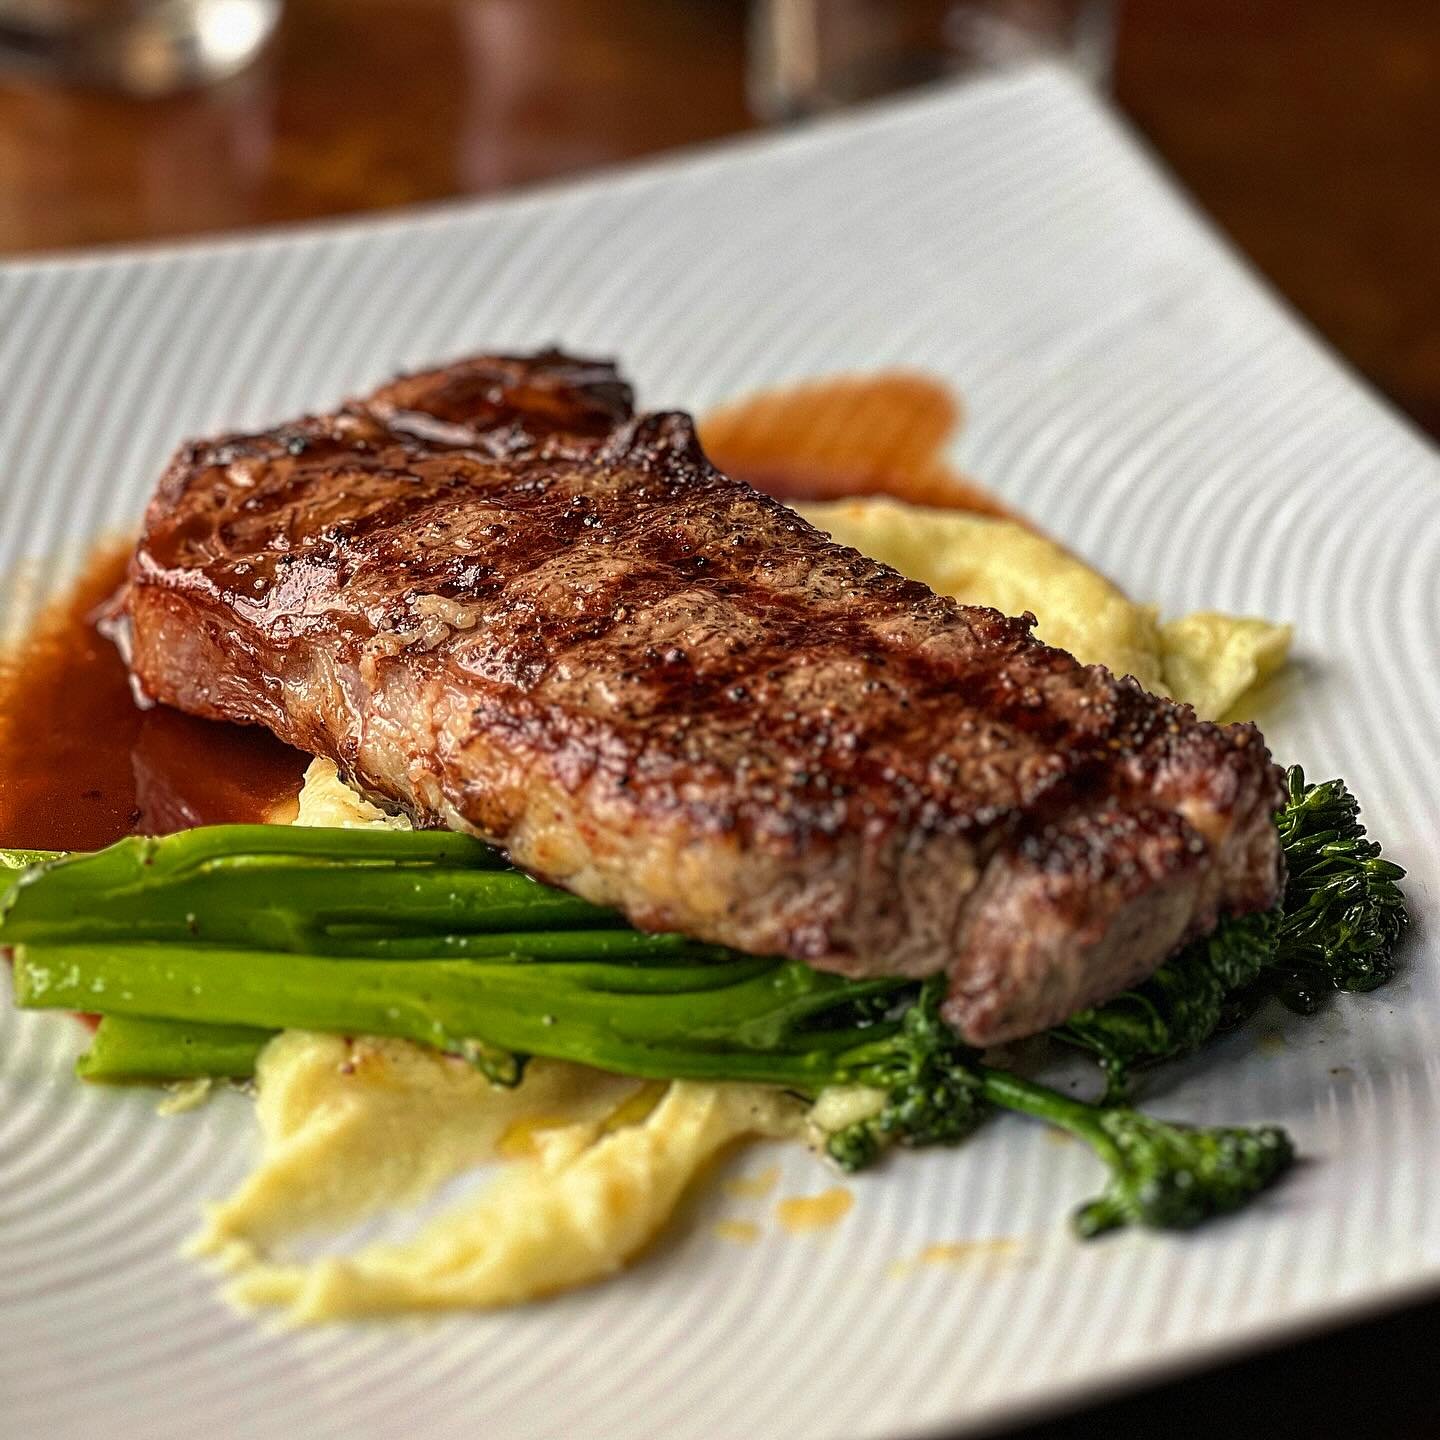 10 oz Grilled Steak.
Painted Hills Farm Natural Beef Sirloin, Mashed Potatoes, Red Wine Demi Glaze, Choice of one side Vegetable.
-
-
-
#theWashingtonSquareTavern  #brooklineeats #bostontavern #steak